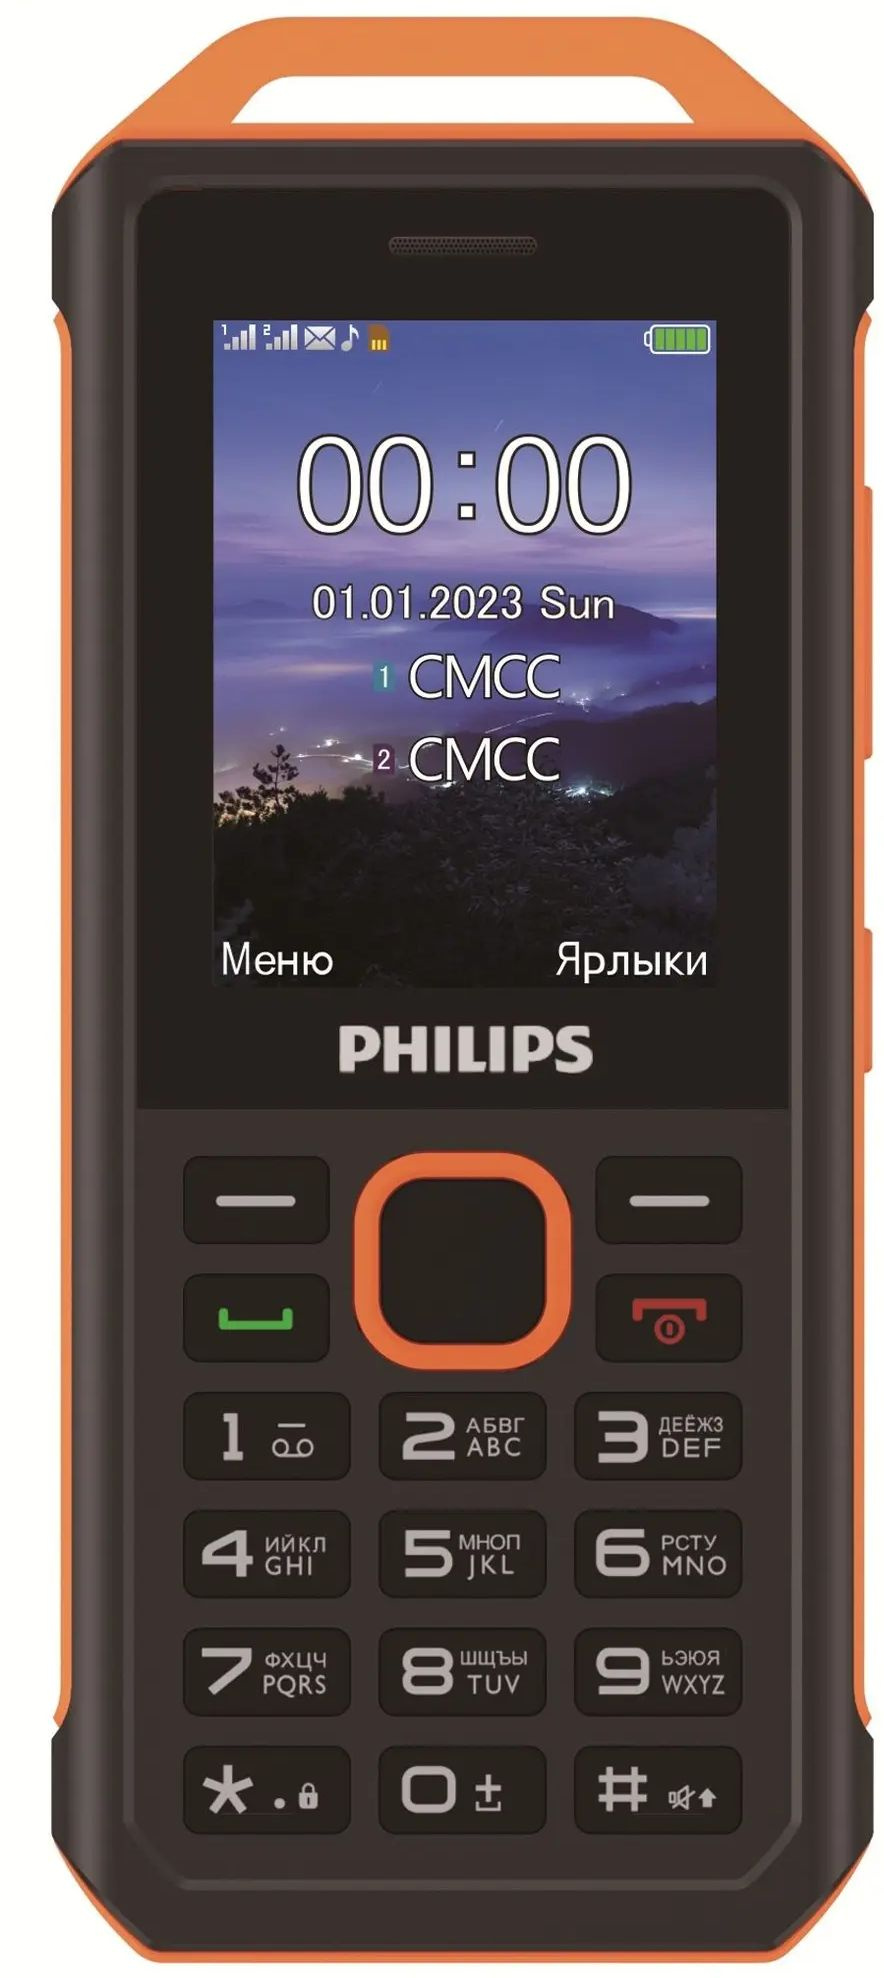 Мобильный телефон Philips E2317 Xenium желтый моноблок 2Sim 2.4" 240x320 Nucleus 0.3Mpix GSM900/ 1800 MP3 FM microSD max32Gb (CTE2317YL/00)